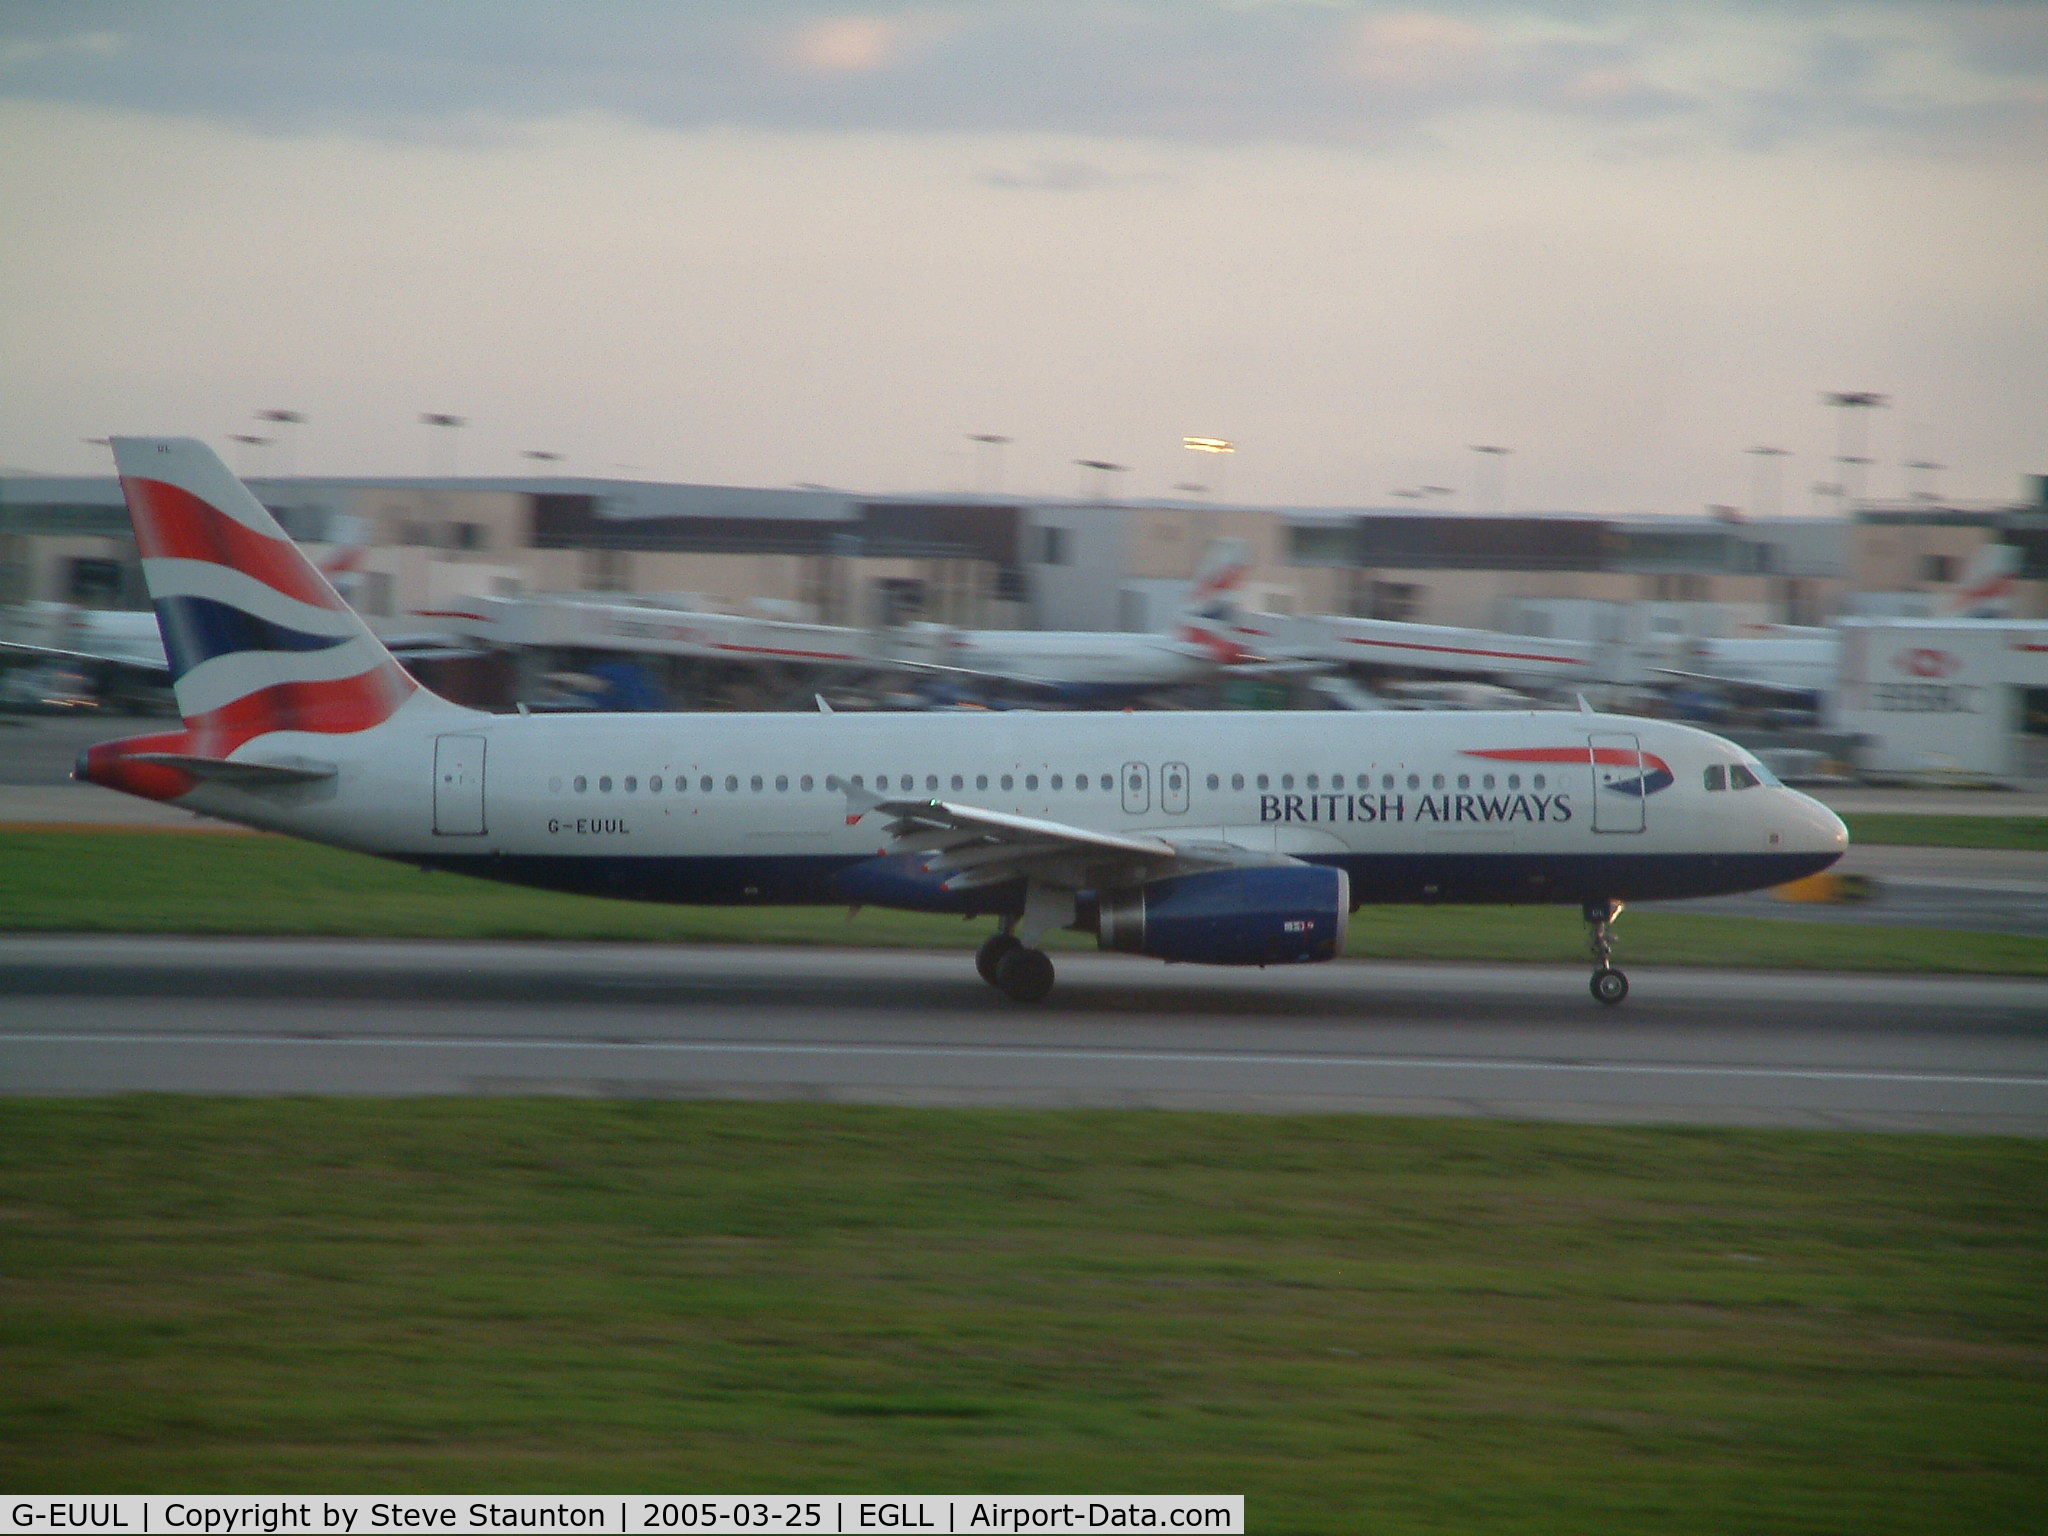 G-EUUL, 2002 Airbus A320-232 C/N 1708, Taken at Heathrow Airport March 2005